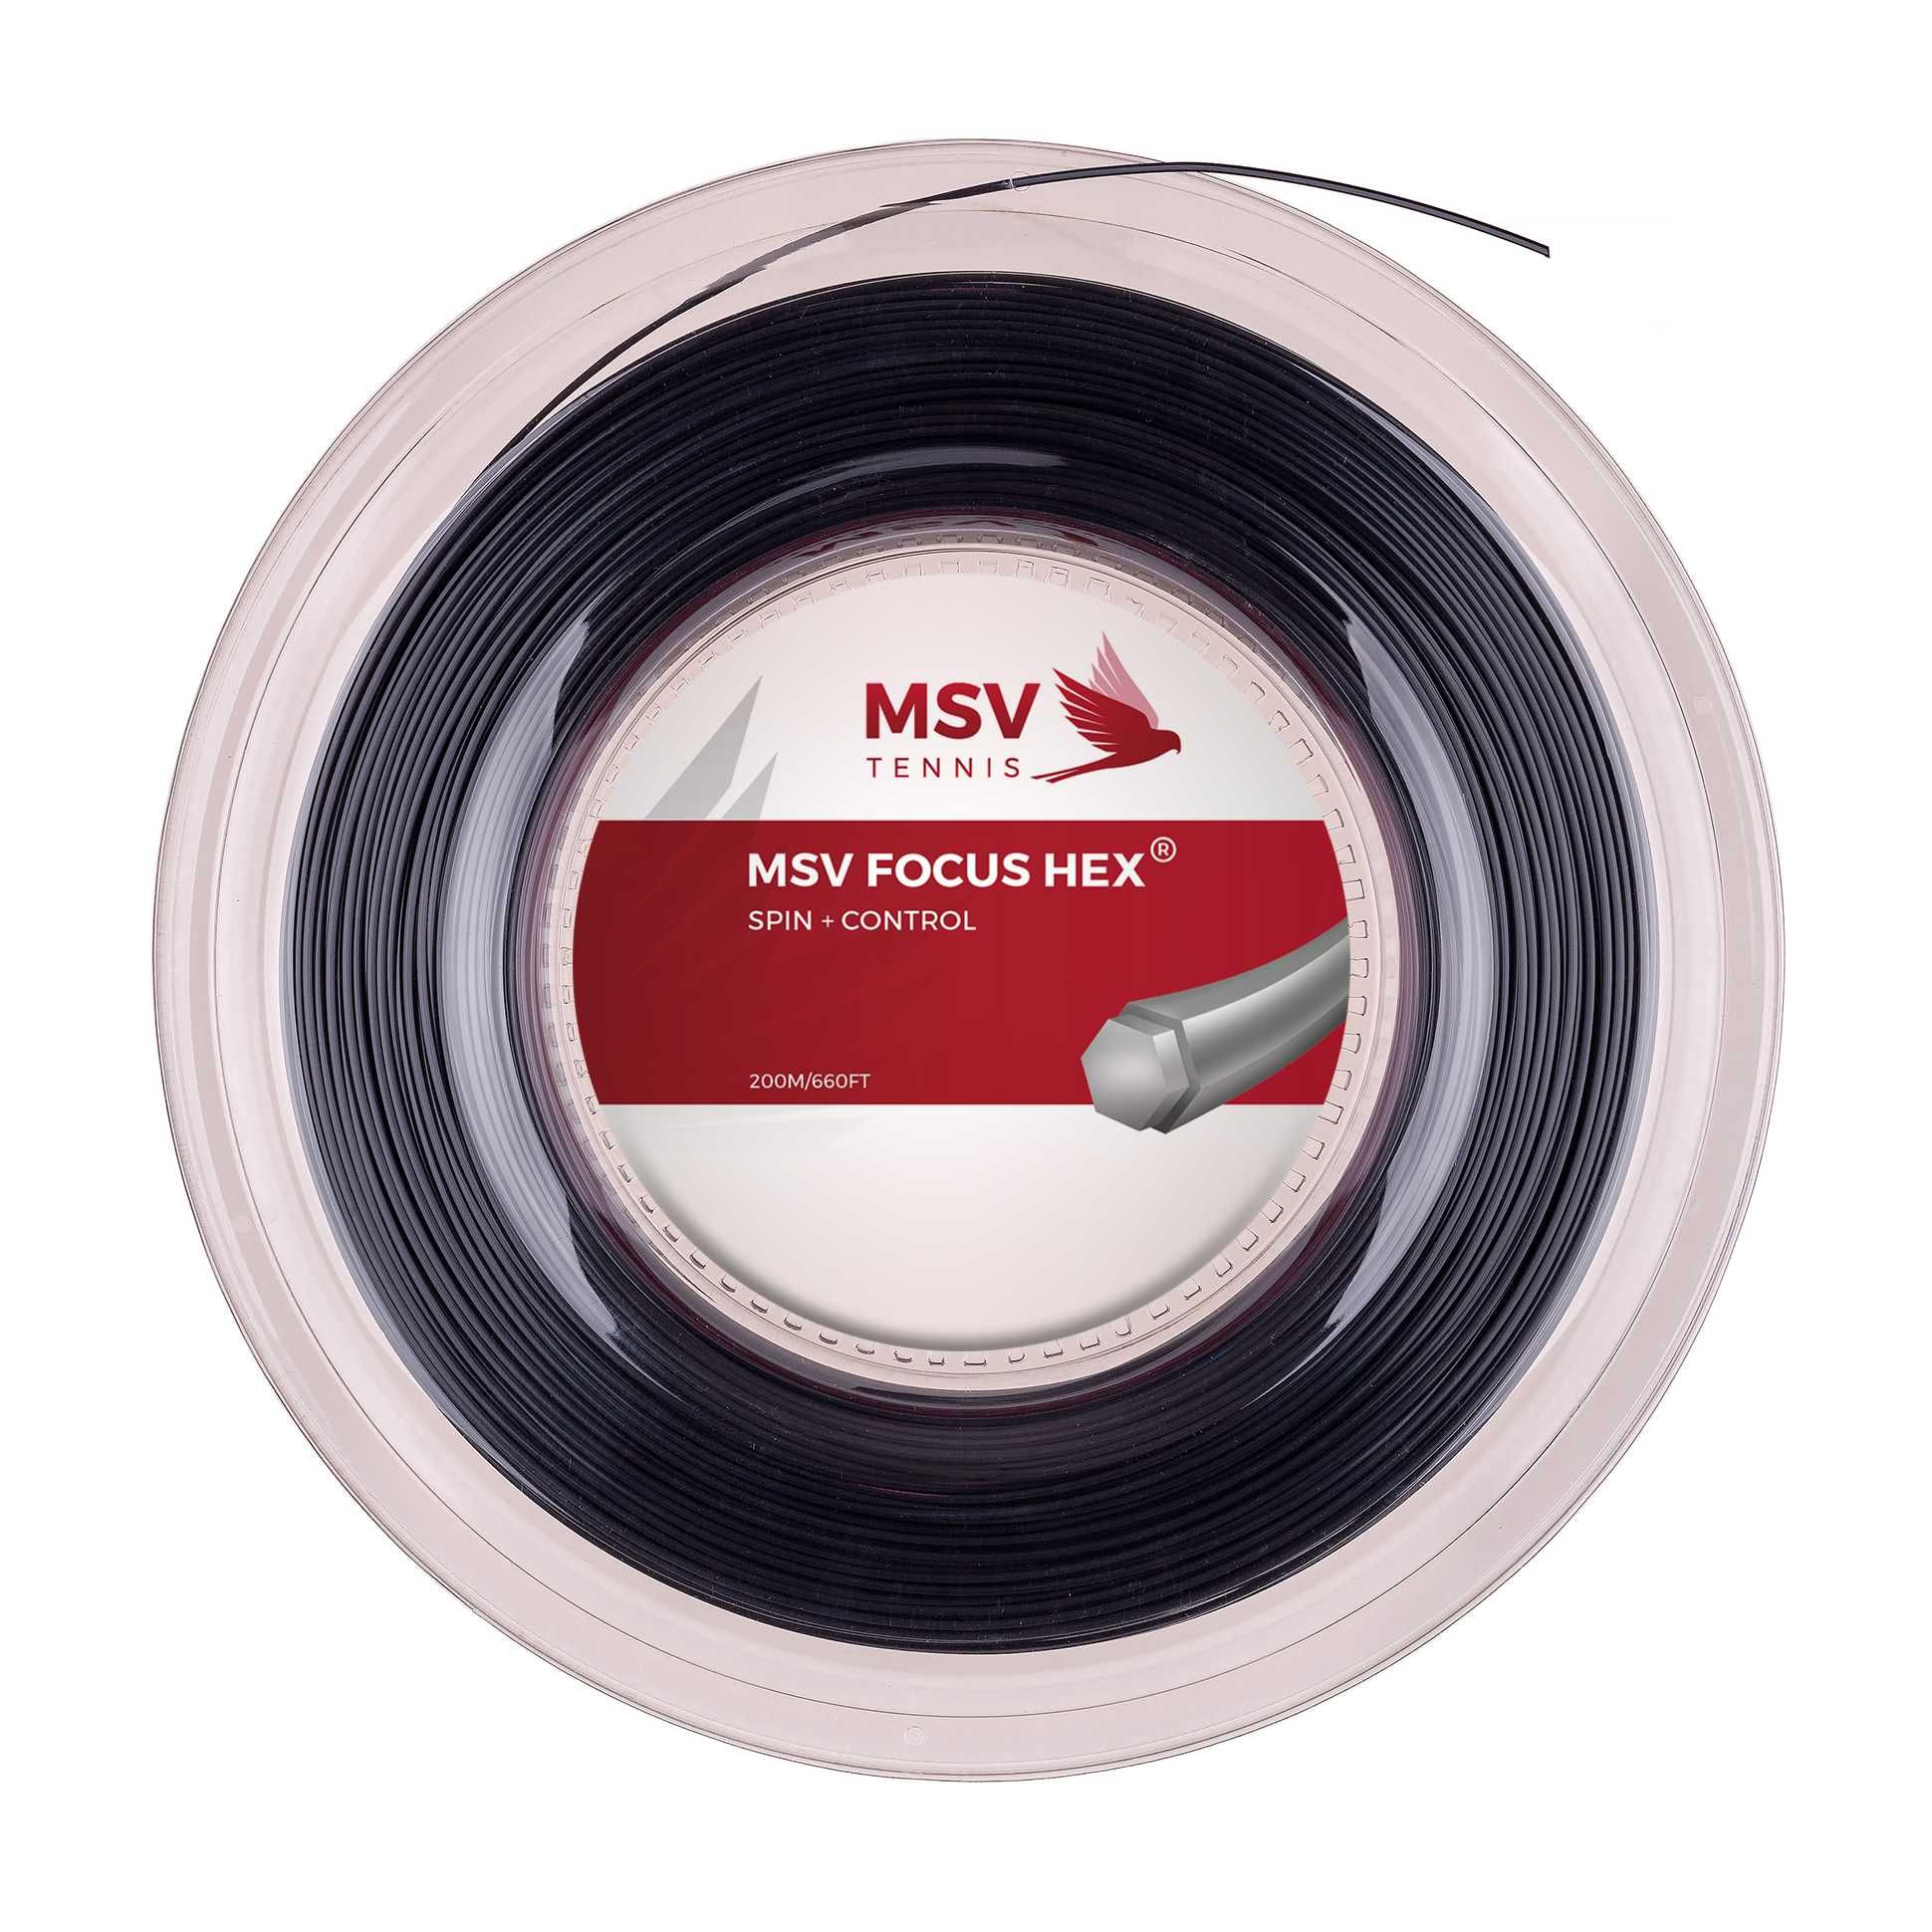 Racordaj tenis din rola MSV Focus Hex negru grosime 1.18 12m din rola